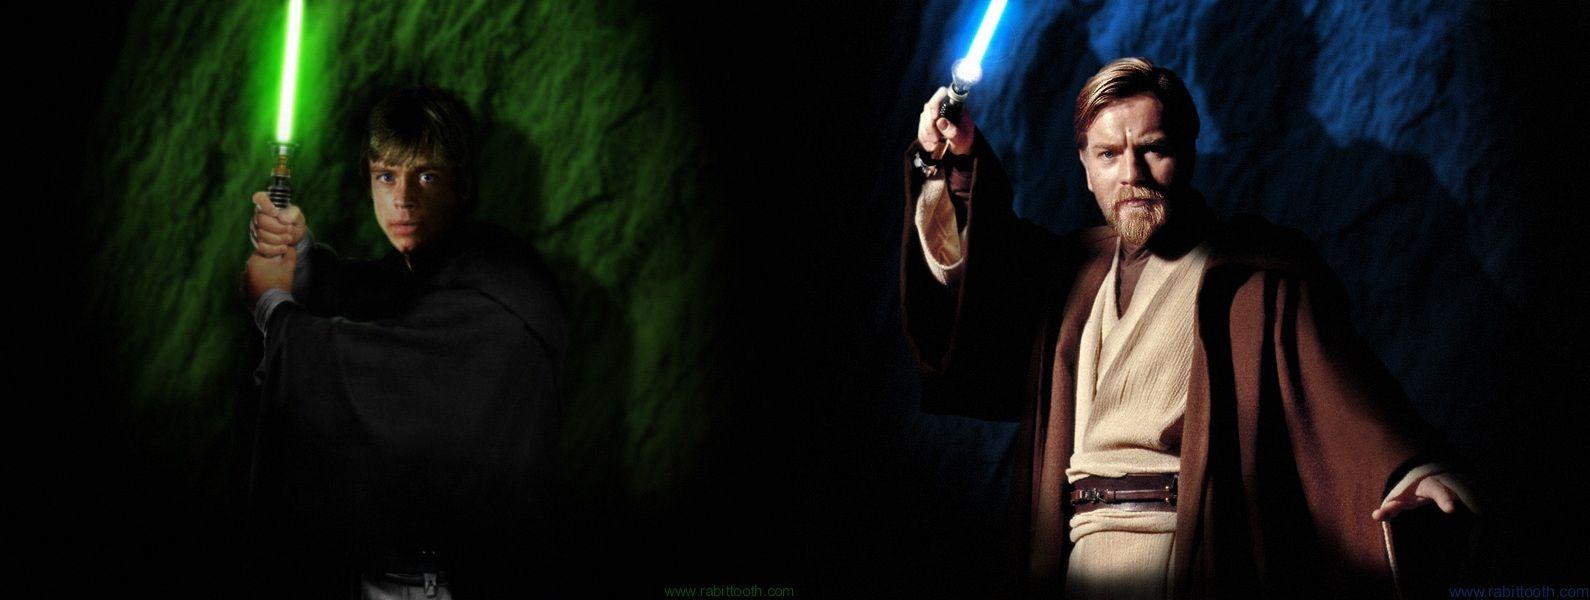 Ben Kenobi And Luke Skywalker Image Obi Wan And Luke HD Wallpaper